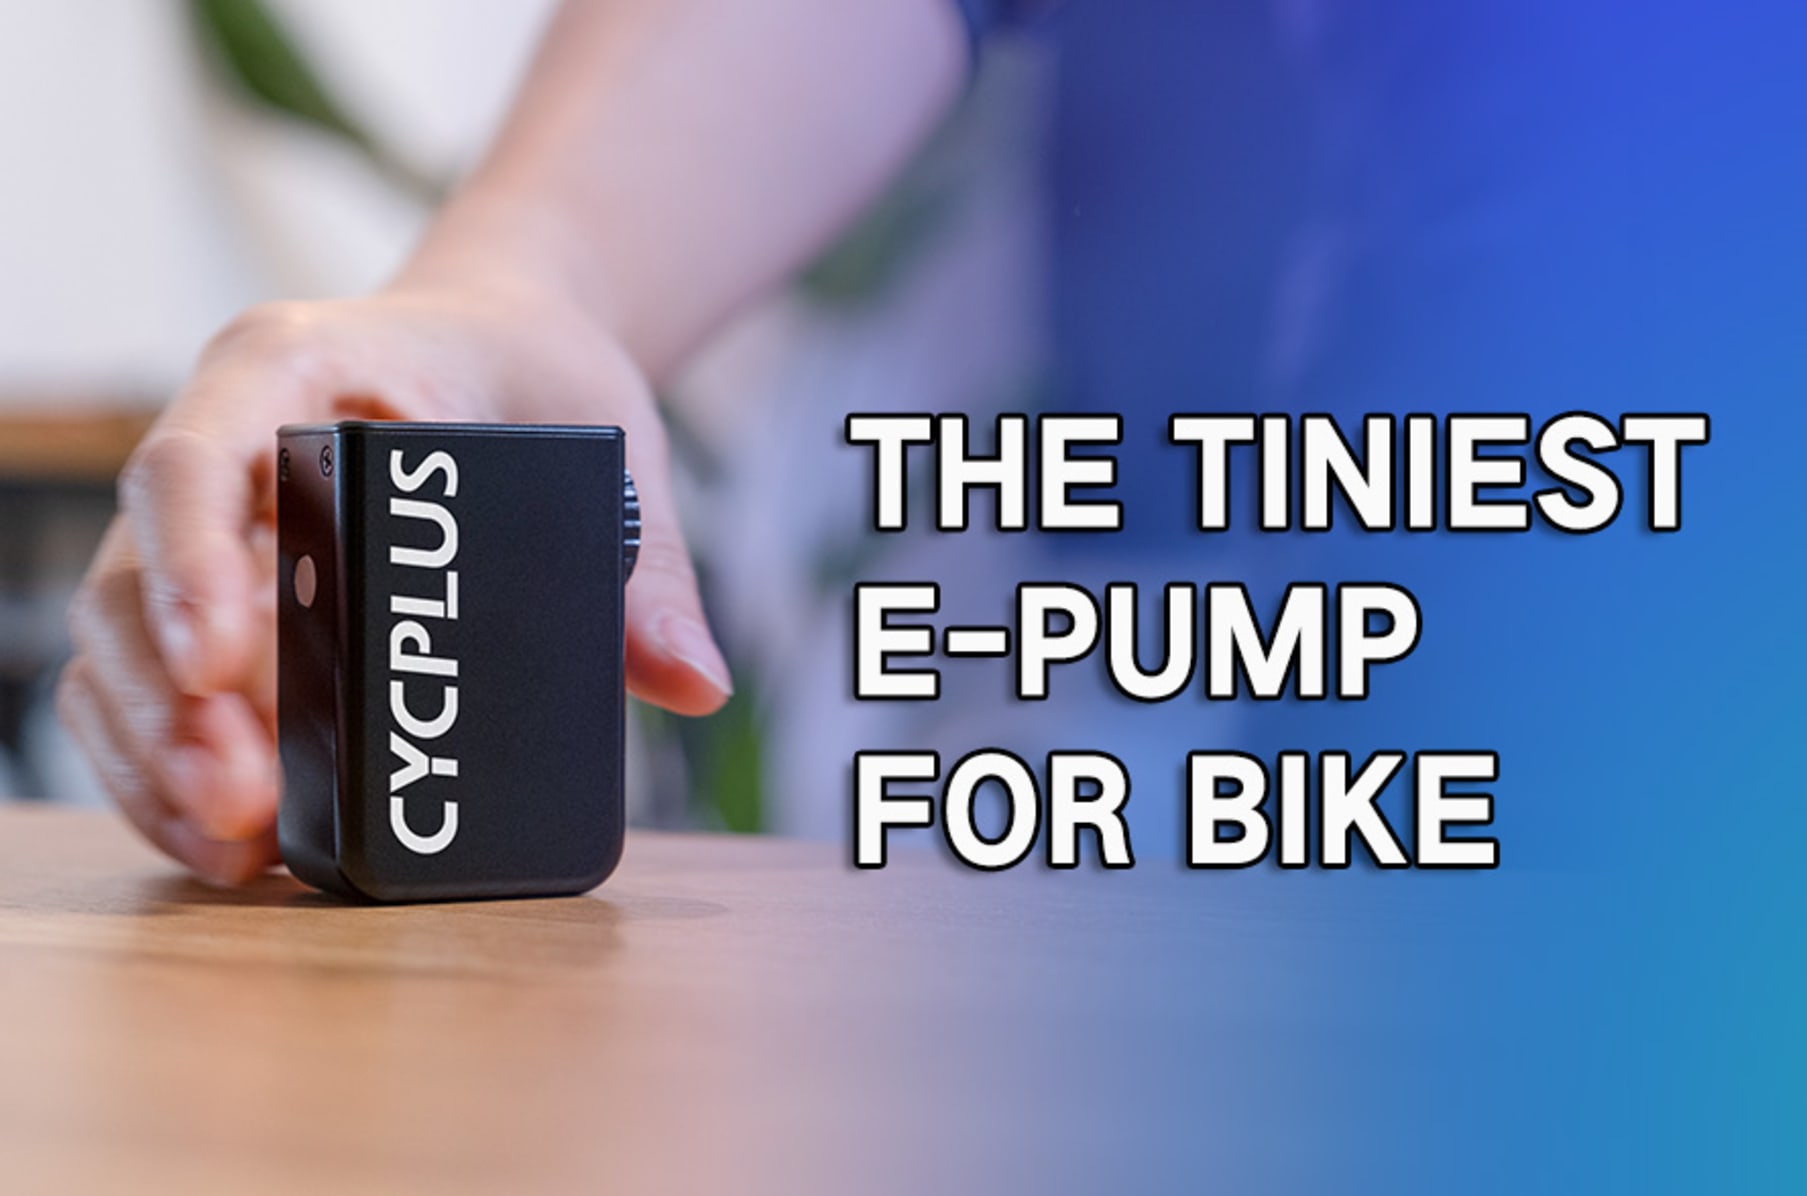 CYCPLUS CUBE - Tiny Bike Pump